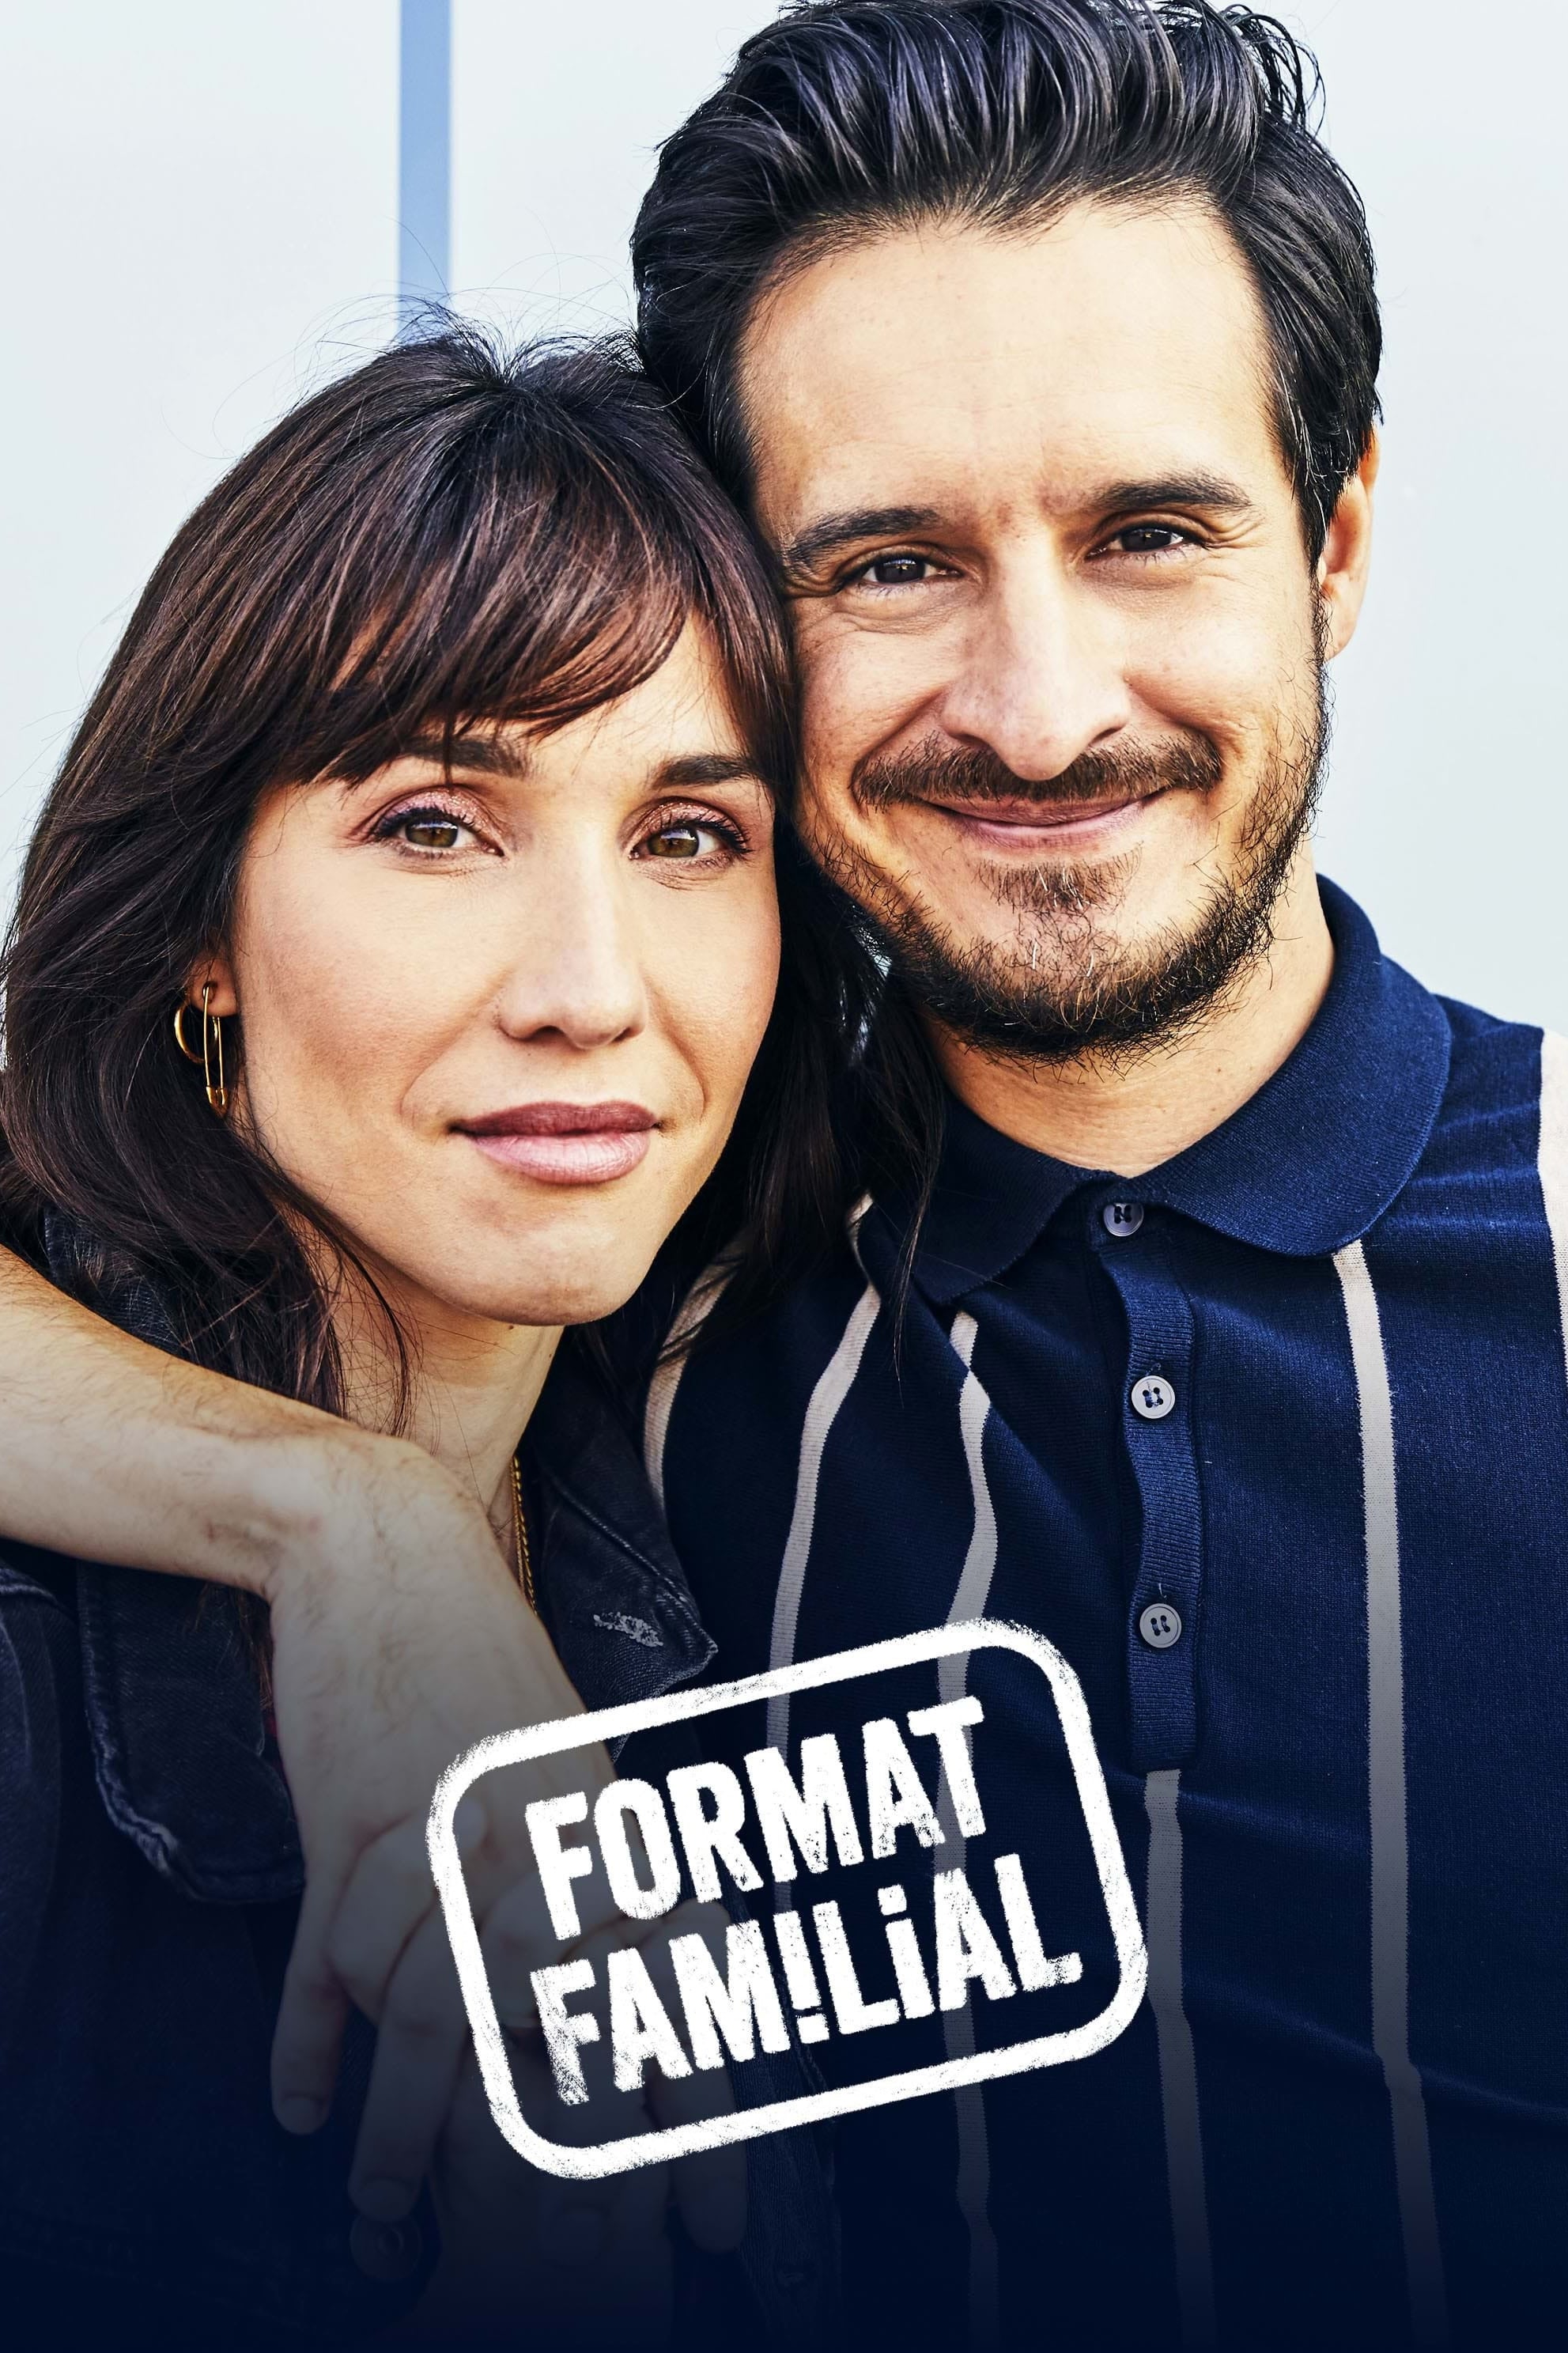 Format familial (2014)